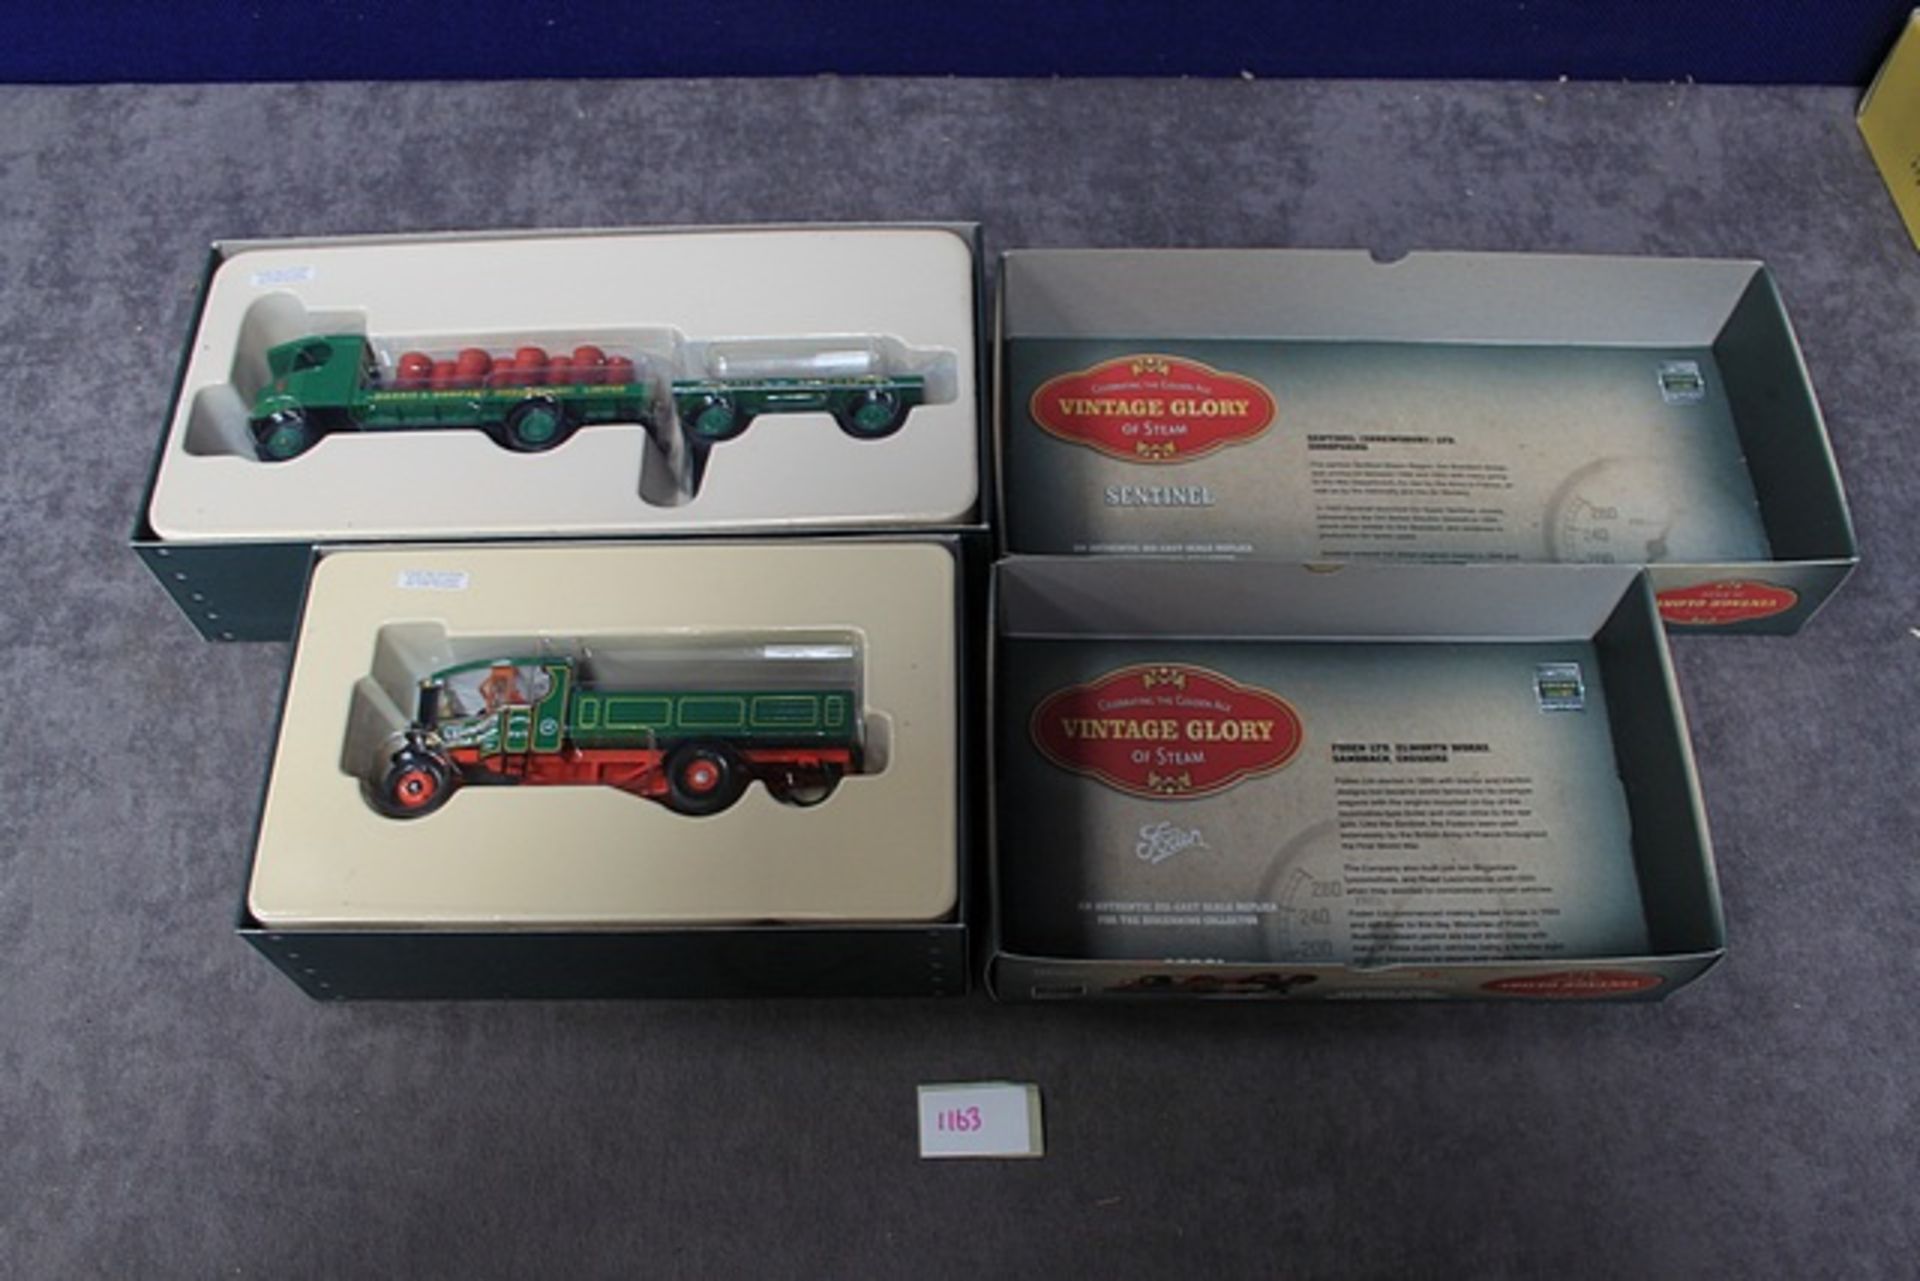 2x Corgi Vintage Glory diecast in boxes comprising of; 80008 Sentinel Platform Wagon, Trailer & - Image 2 of 2